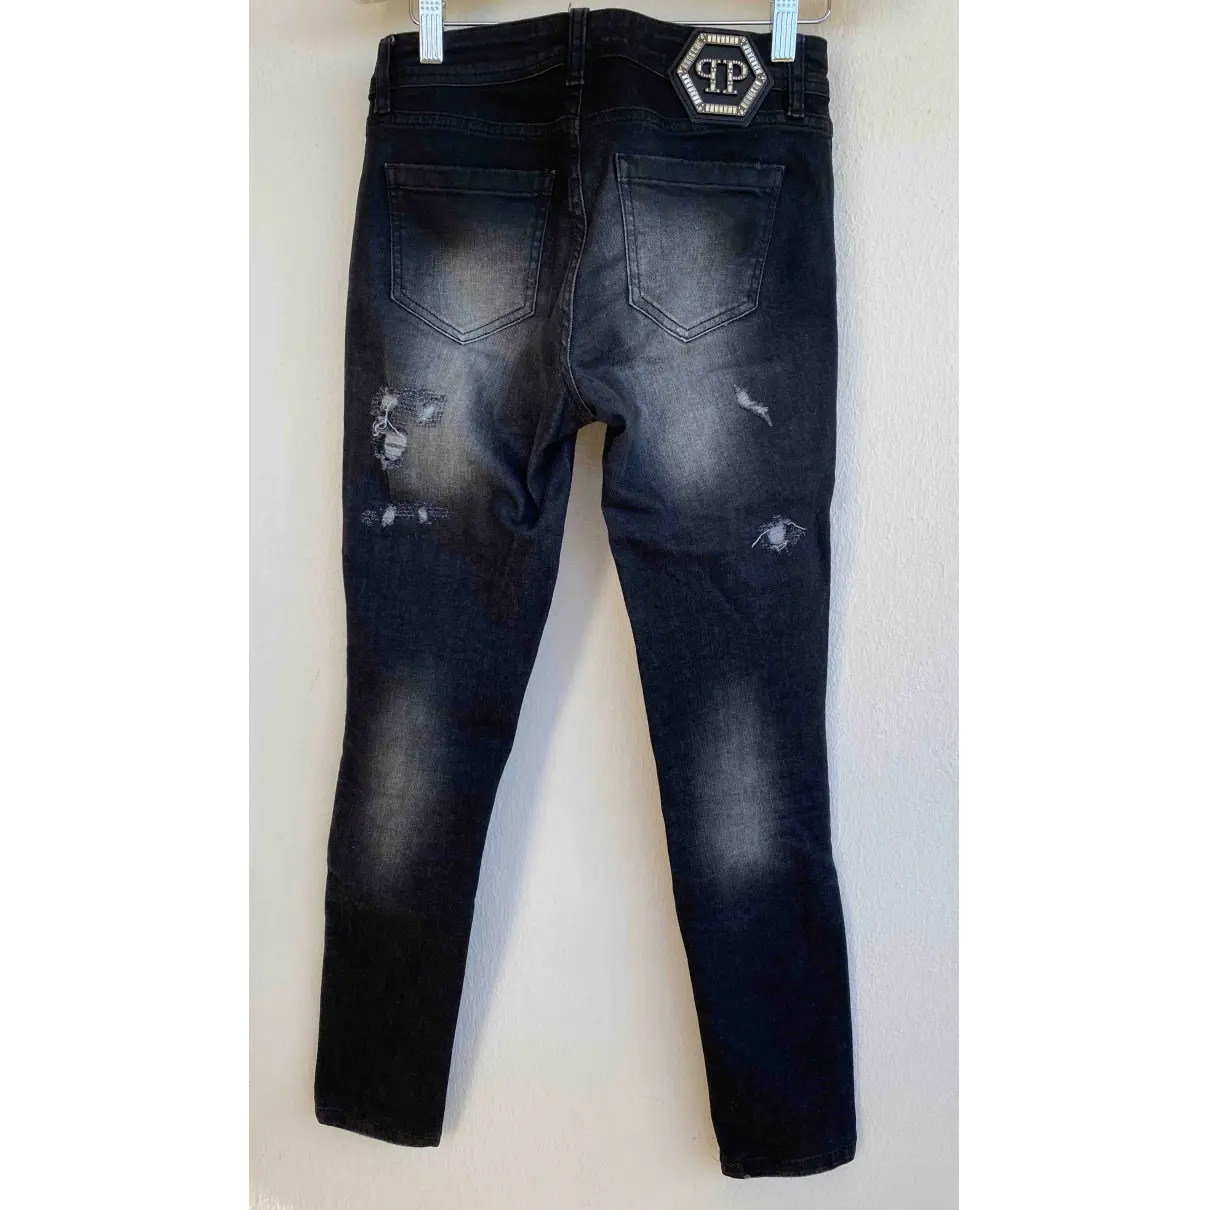 Buy Philipp Plein Slim jeans online